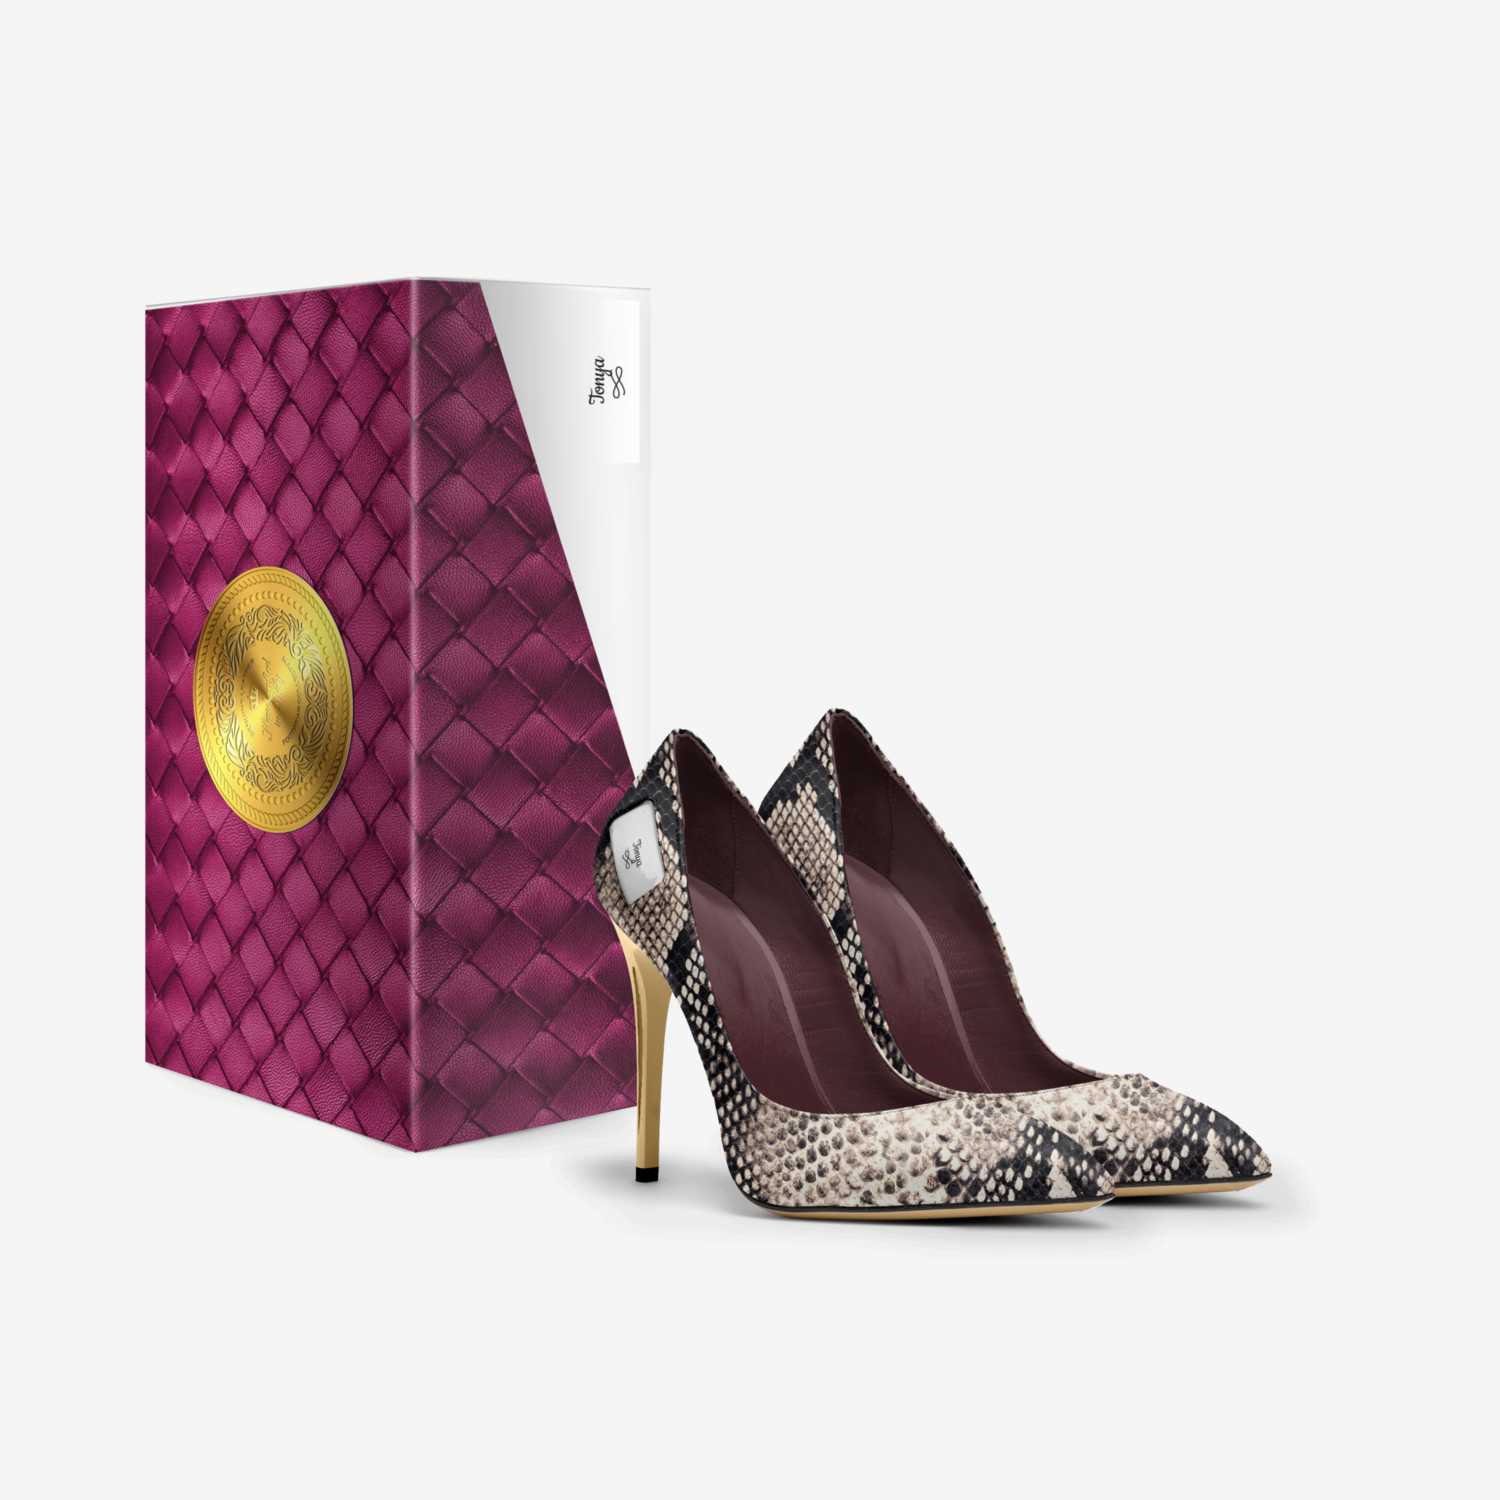 Tonya custom made in Italy shoes by Richard Orlanda | Box view